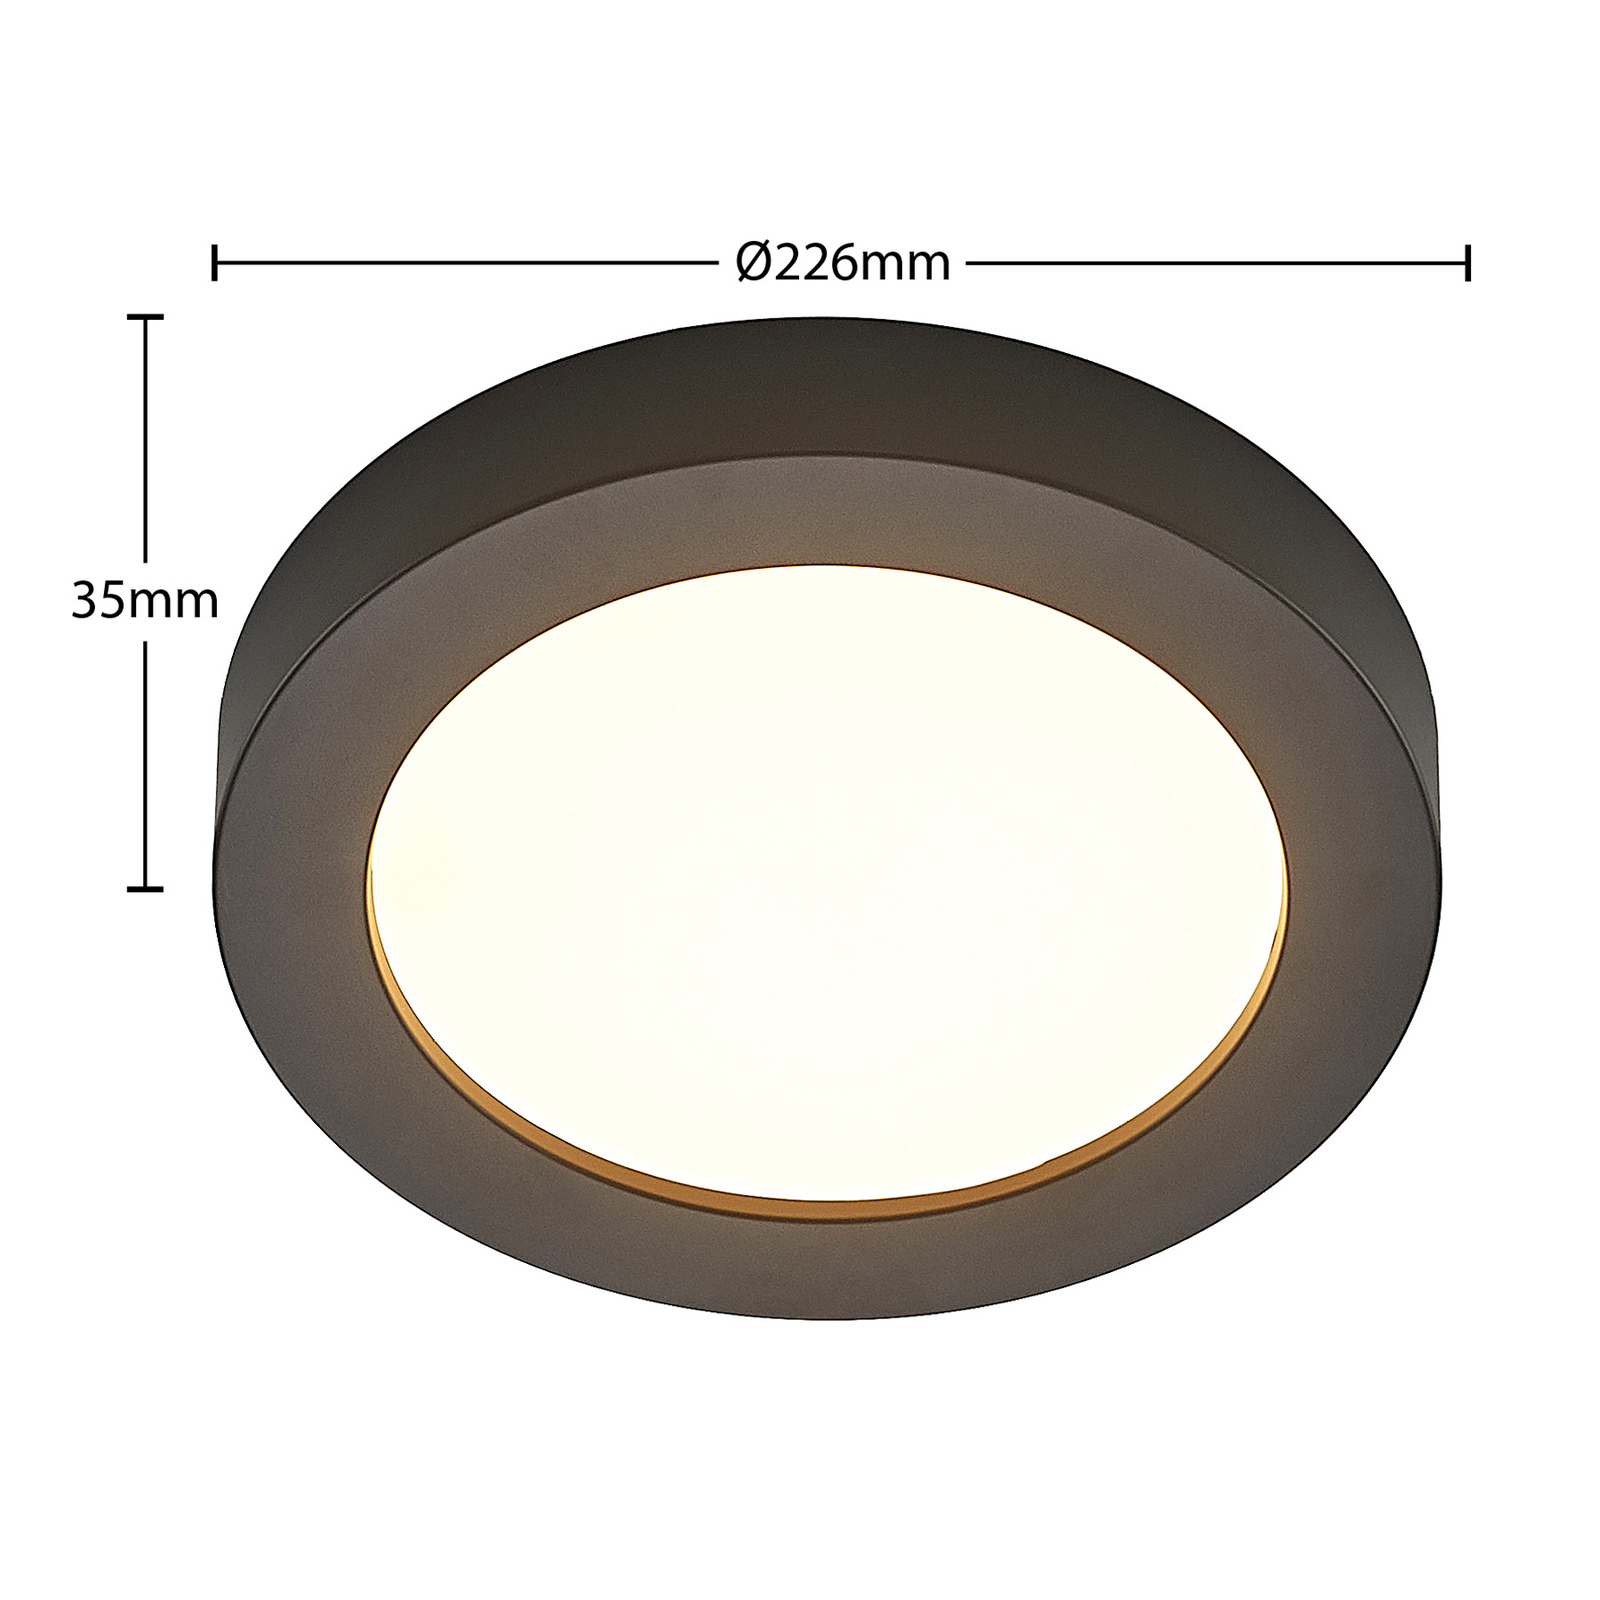 Prios Edwina LED ceiling lamp, black, CCT, 22.6 cm